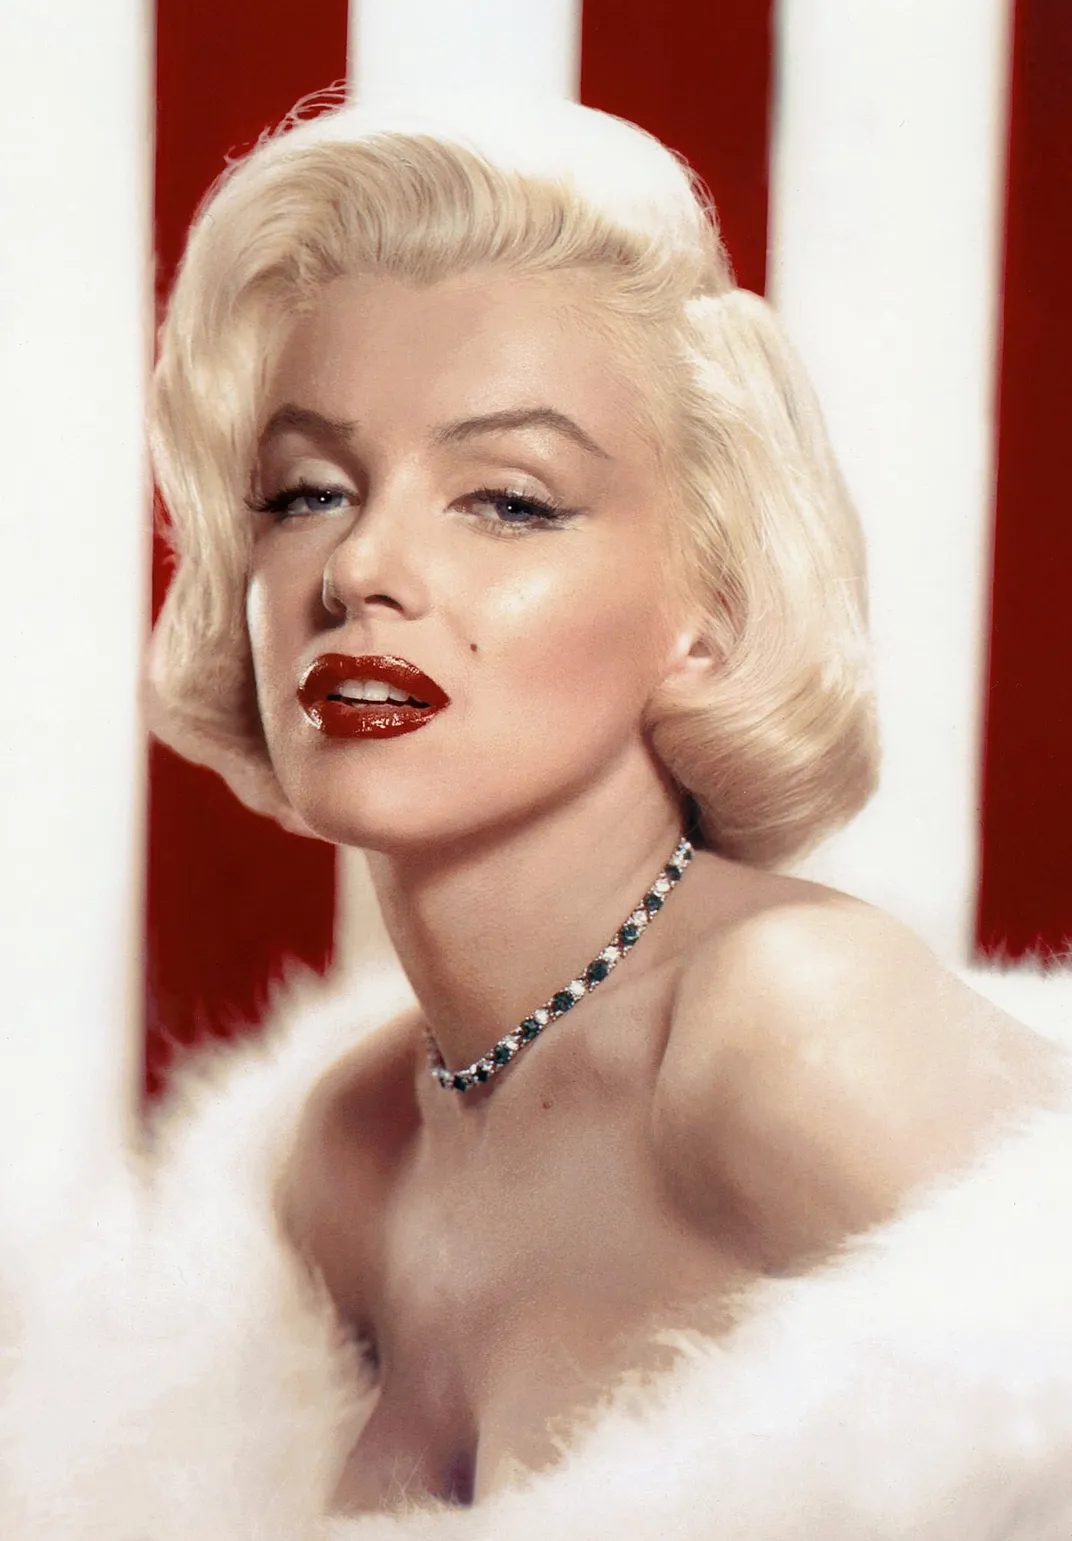 Monroe in a 1953 publicity photo